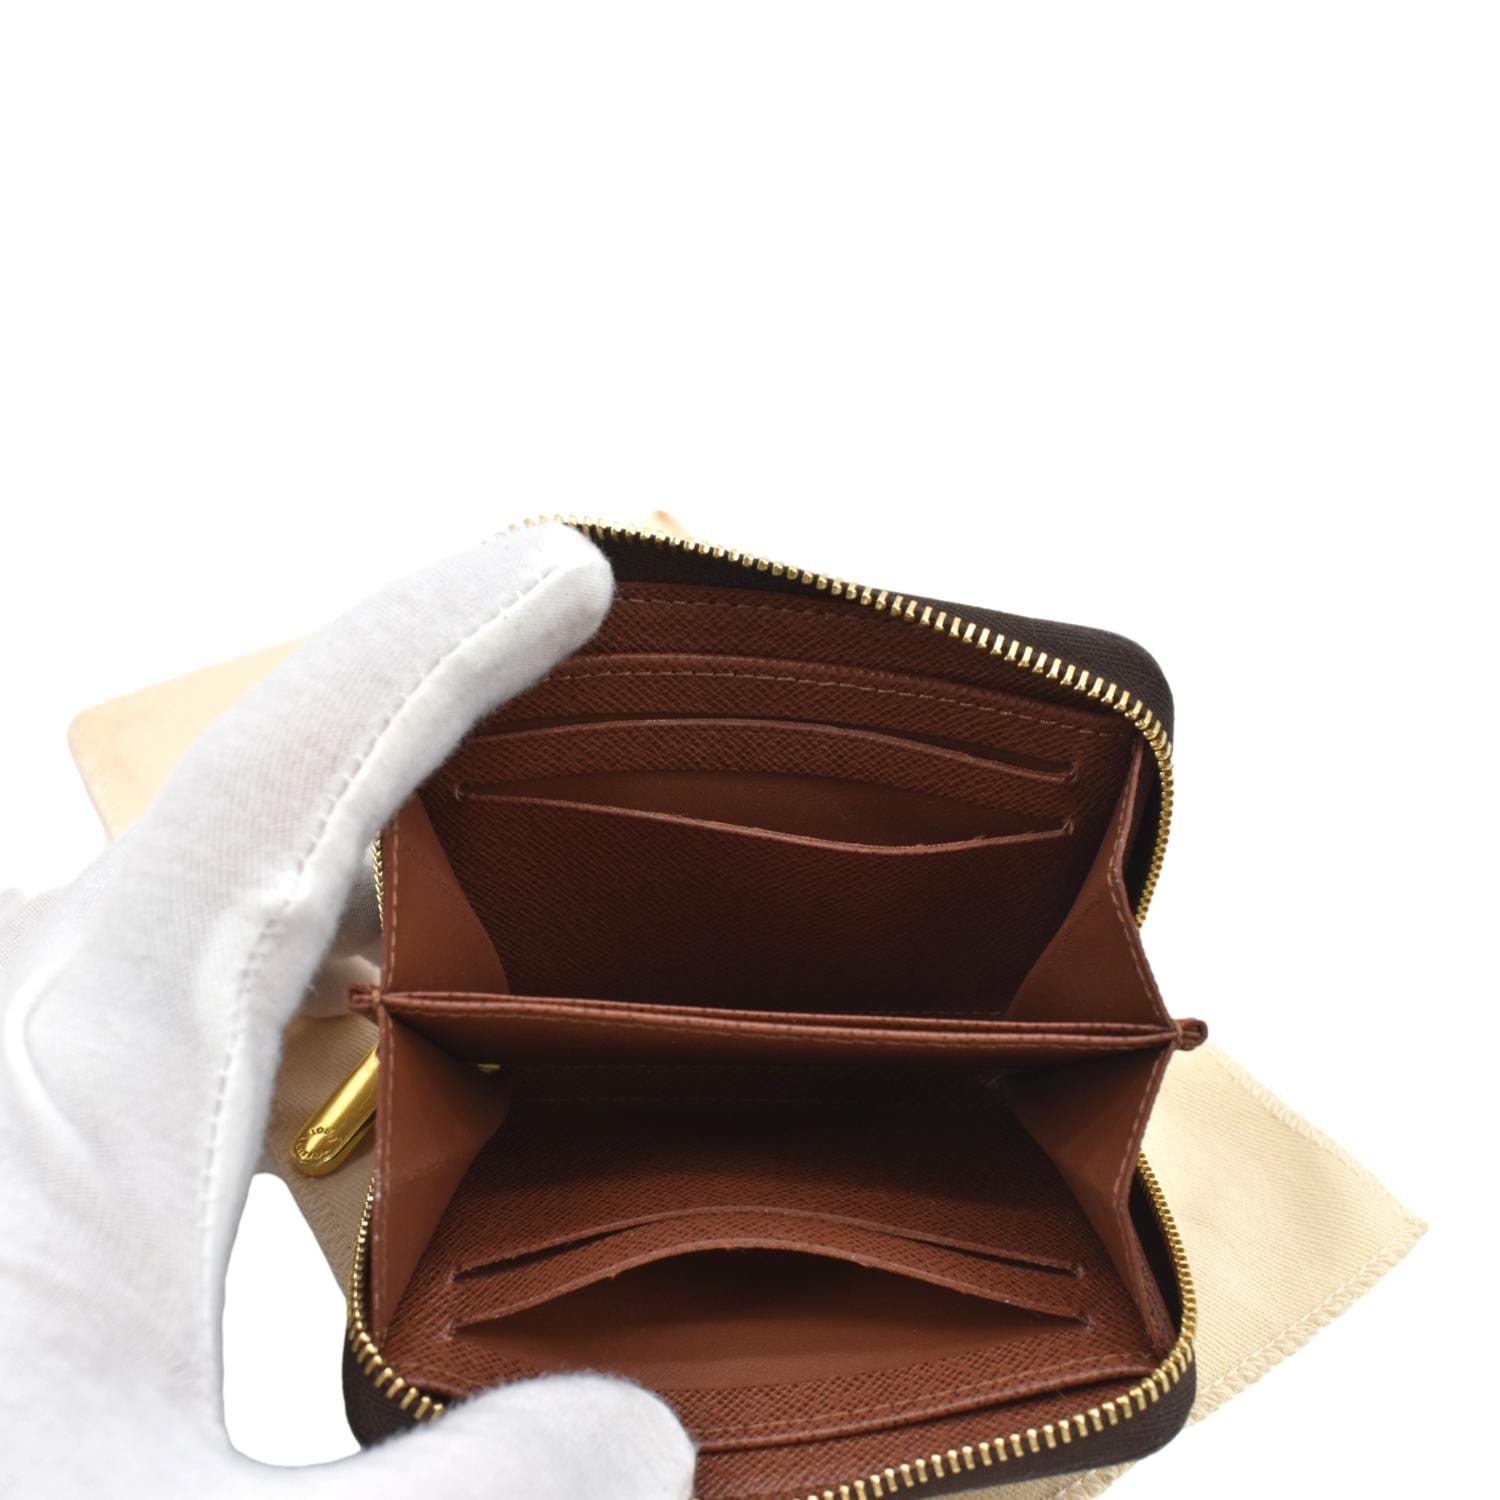 Zippy Coin Purse, Used & Preloved Louis Vuitton Coin purses